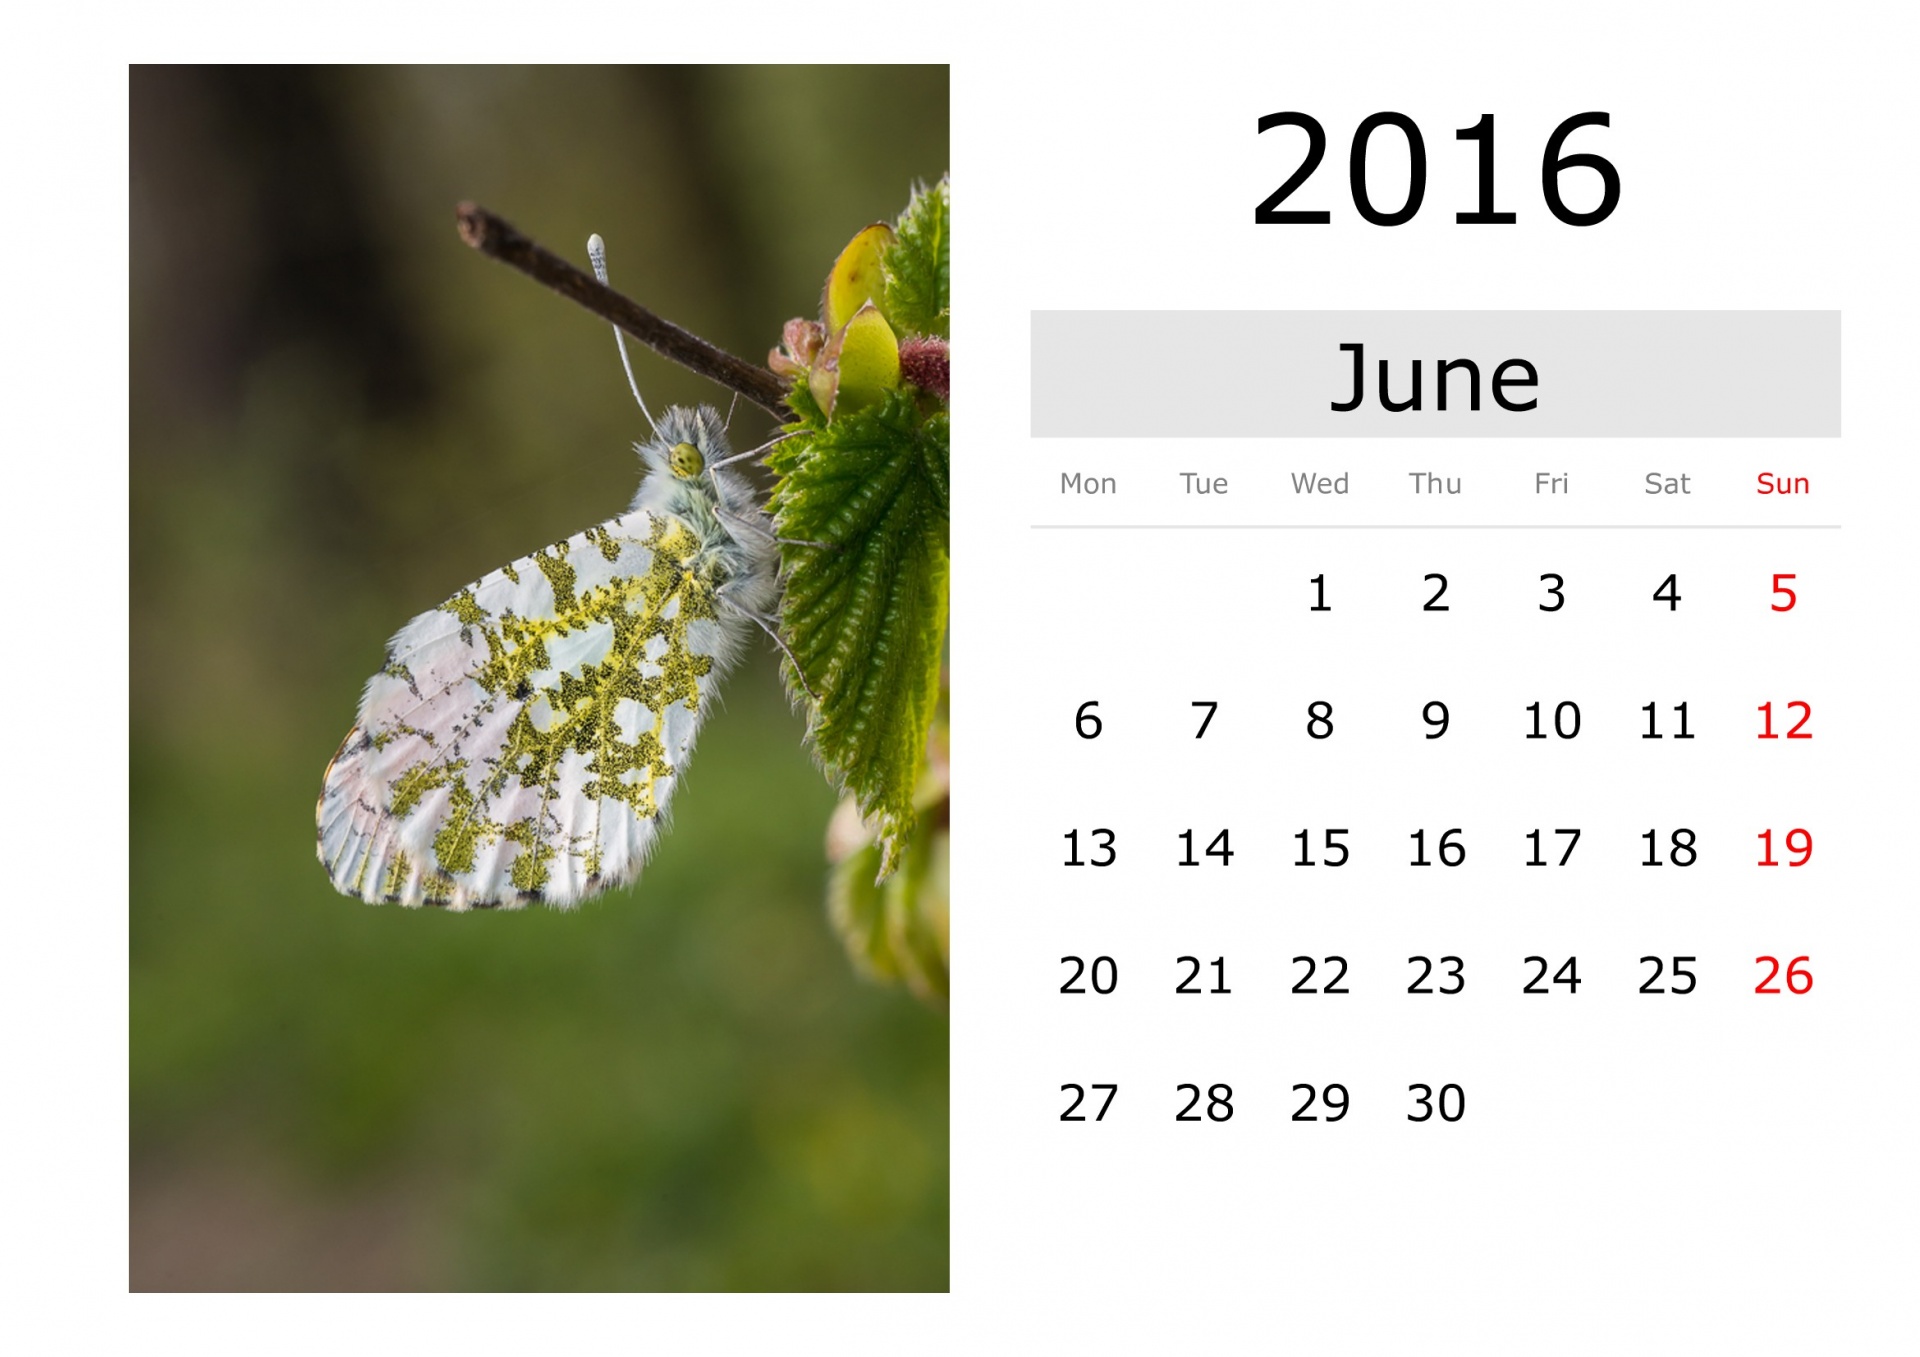 Calendar - June 2016 (English)